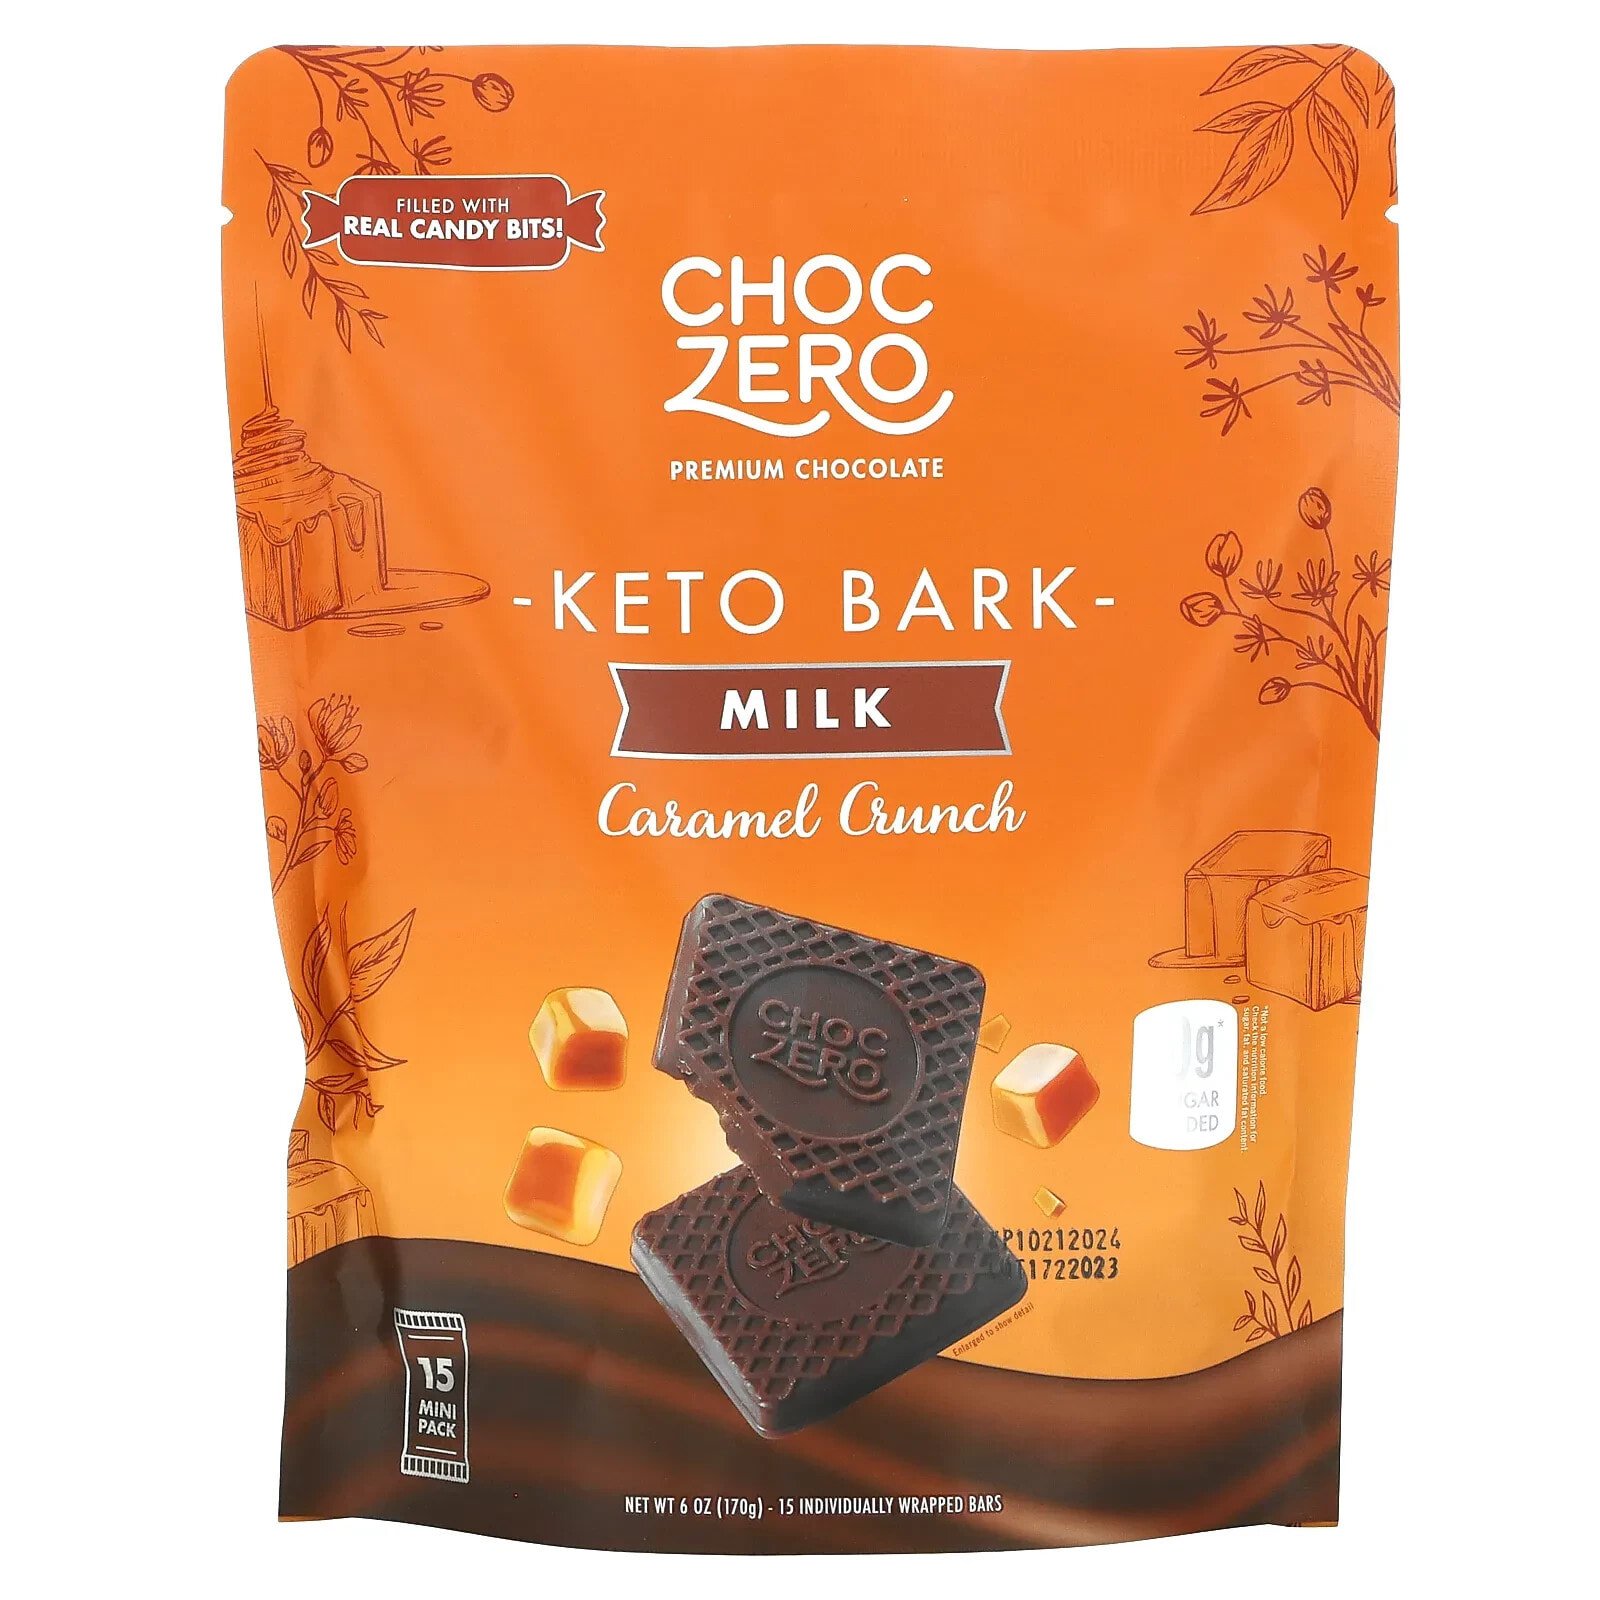 Keto Bark, Milk Caramel Crunch, 15 Mini Packs, 6 oz (170 g)